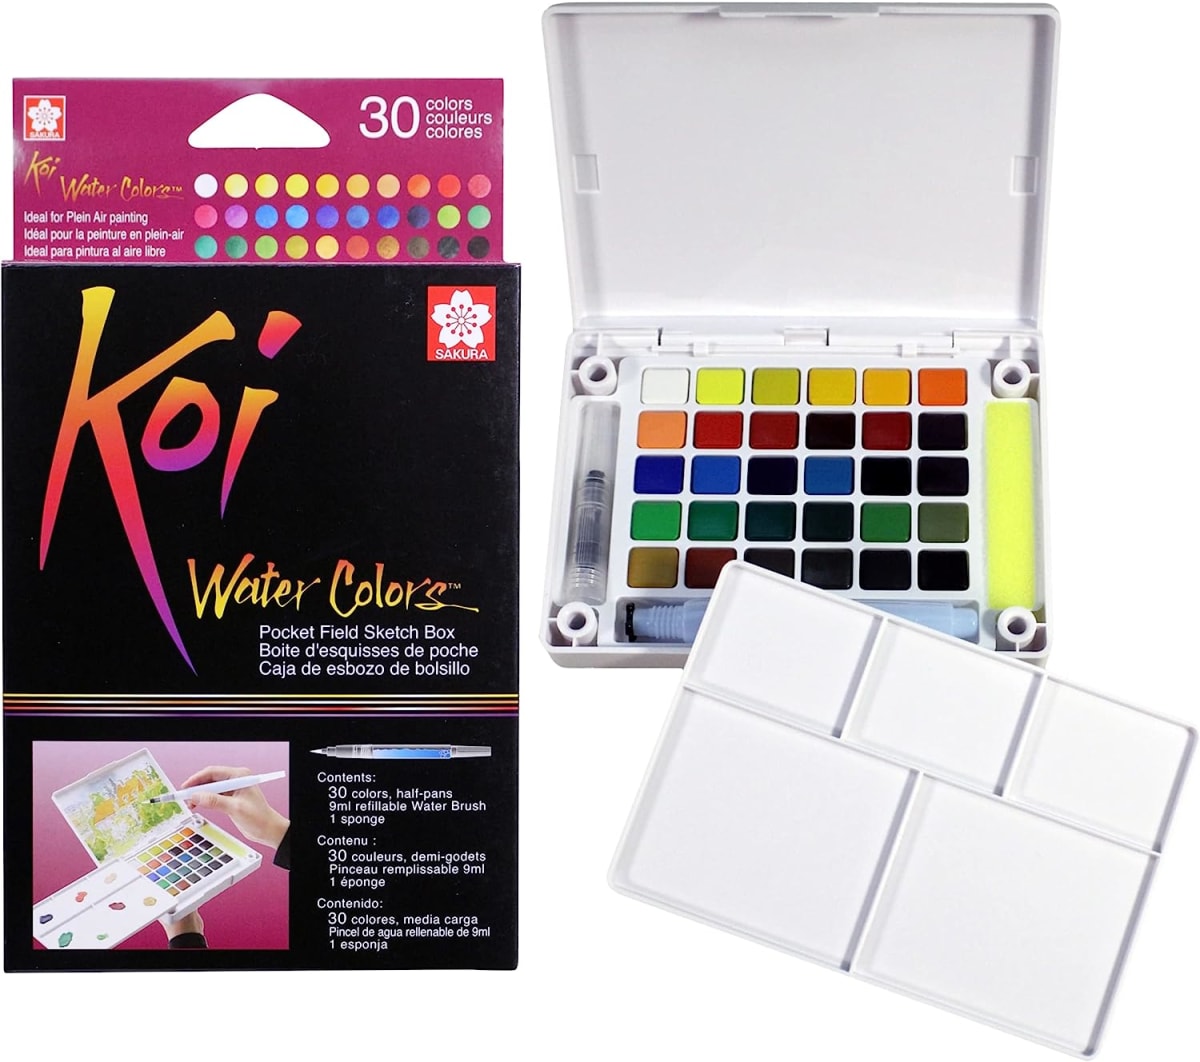 Koi Pocket Field Sketch Kit